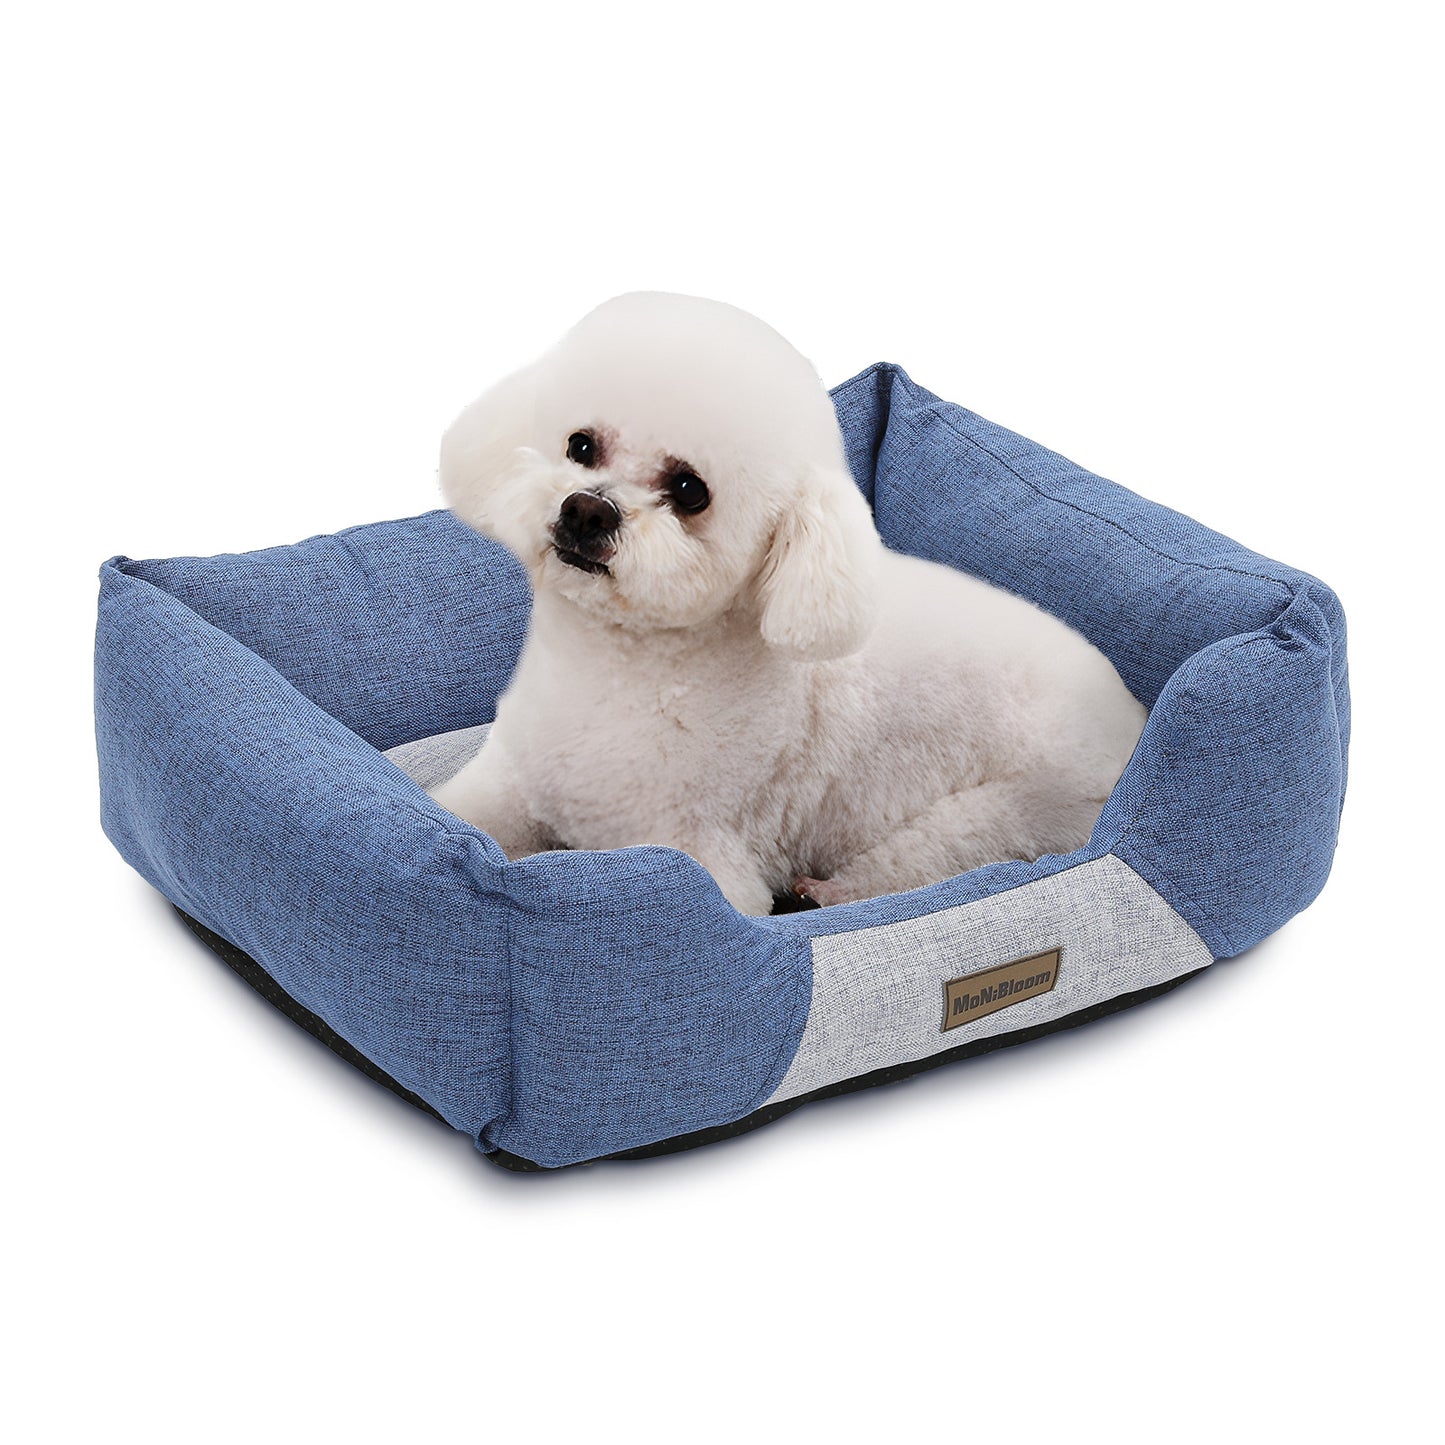 Pet Bed - Rectangle - 20'' Length - Linen-like - Machine Washable